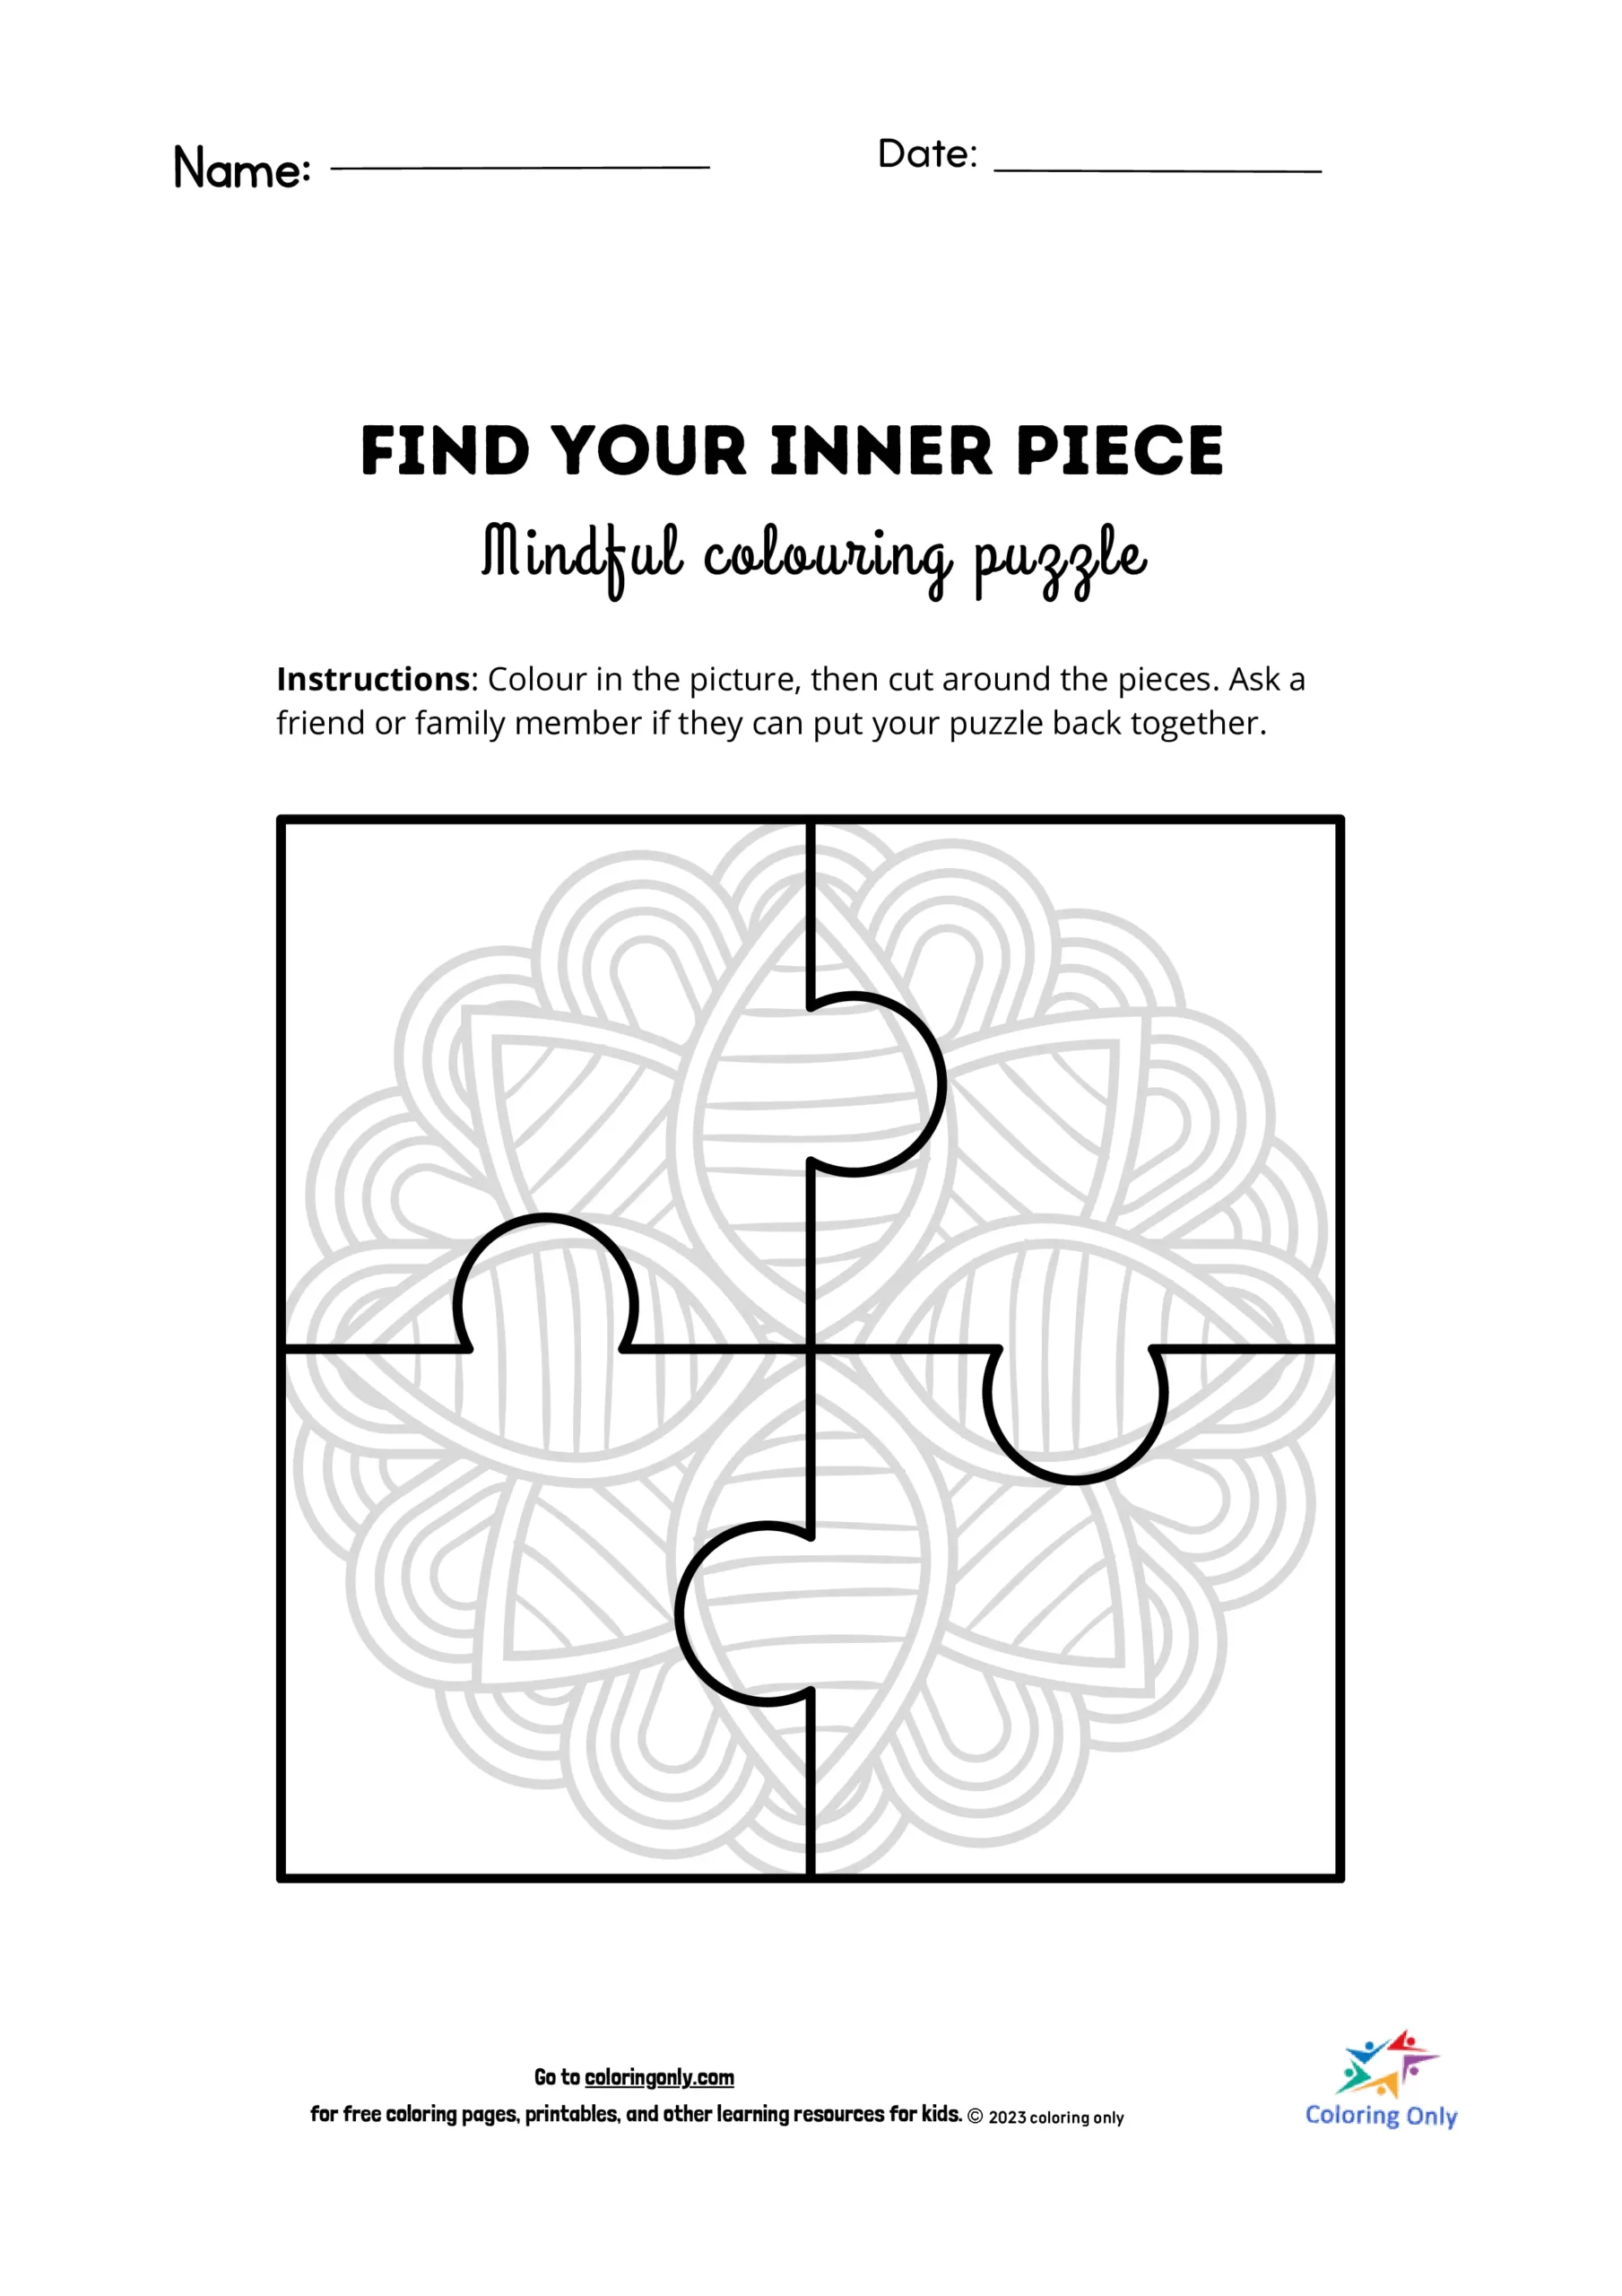 Find Your Inner Piece